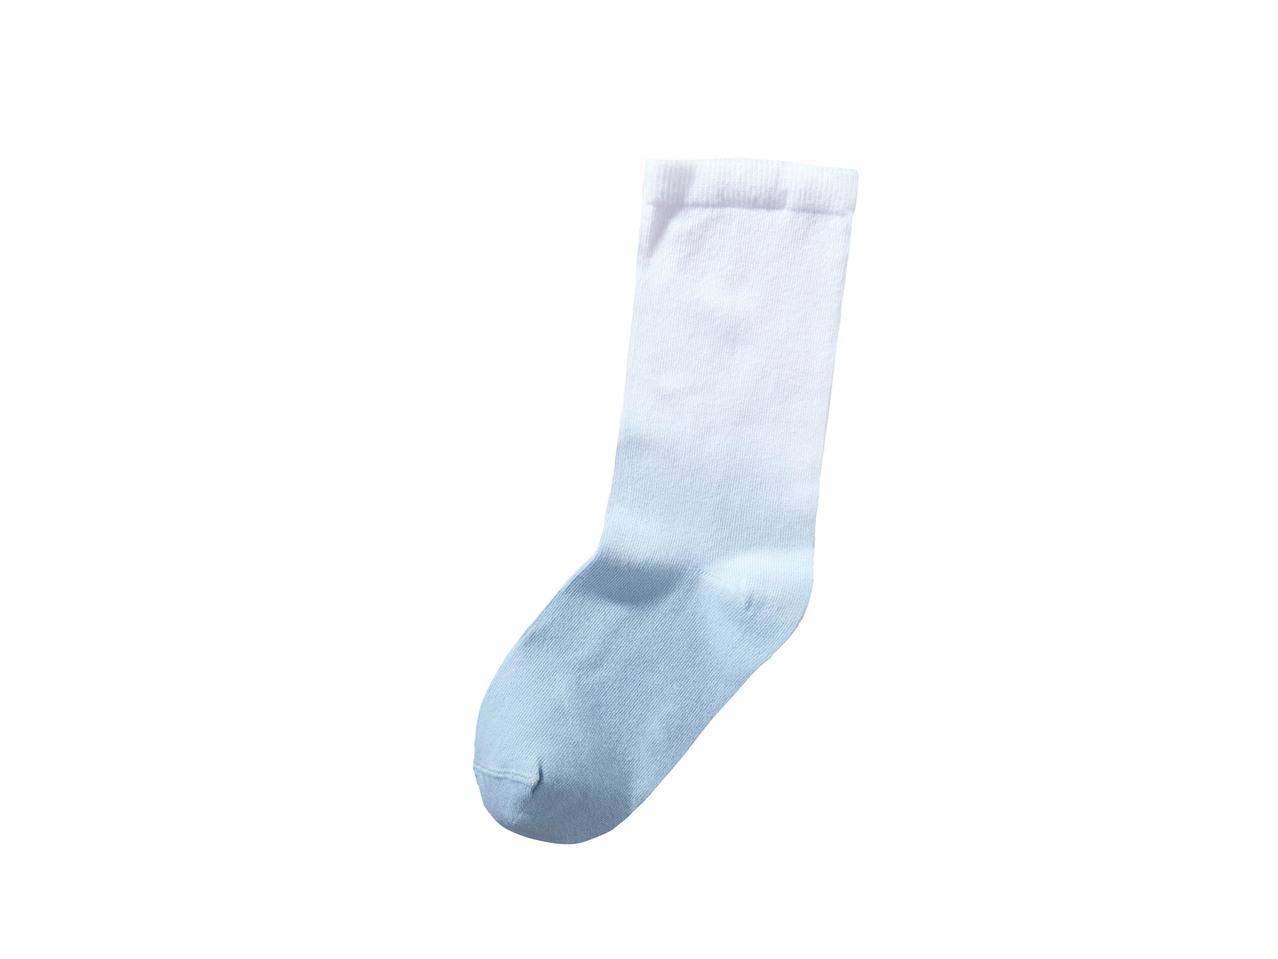 Ladies' Socks, 2 pairs